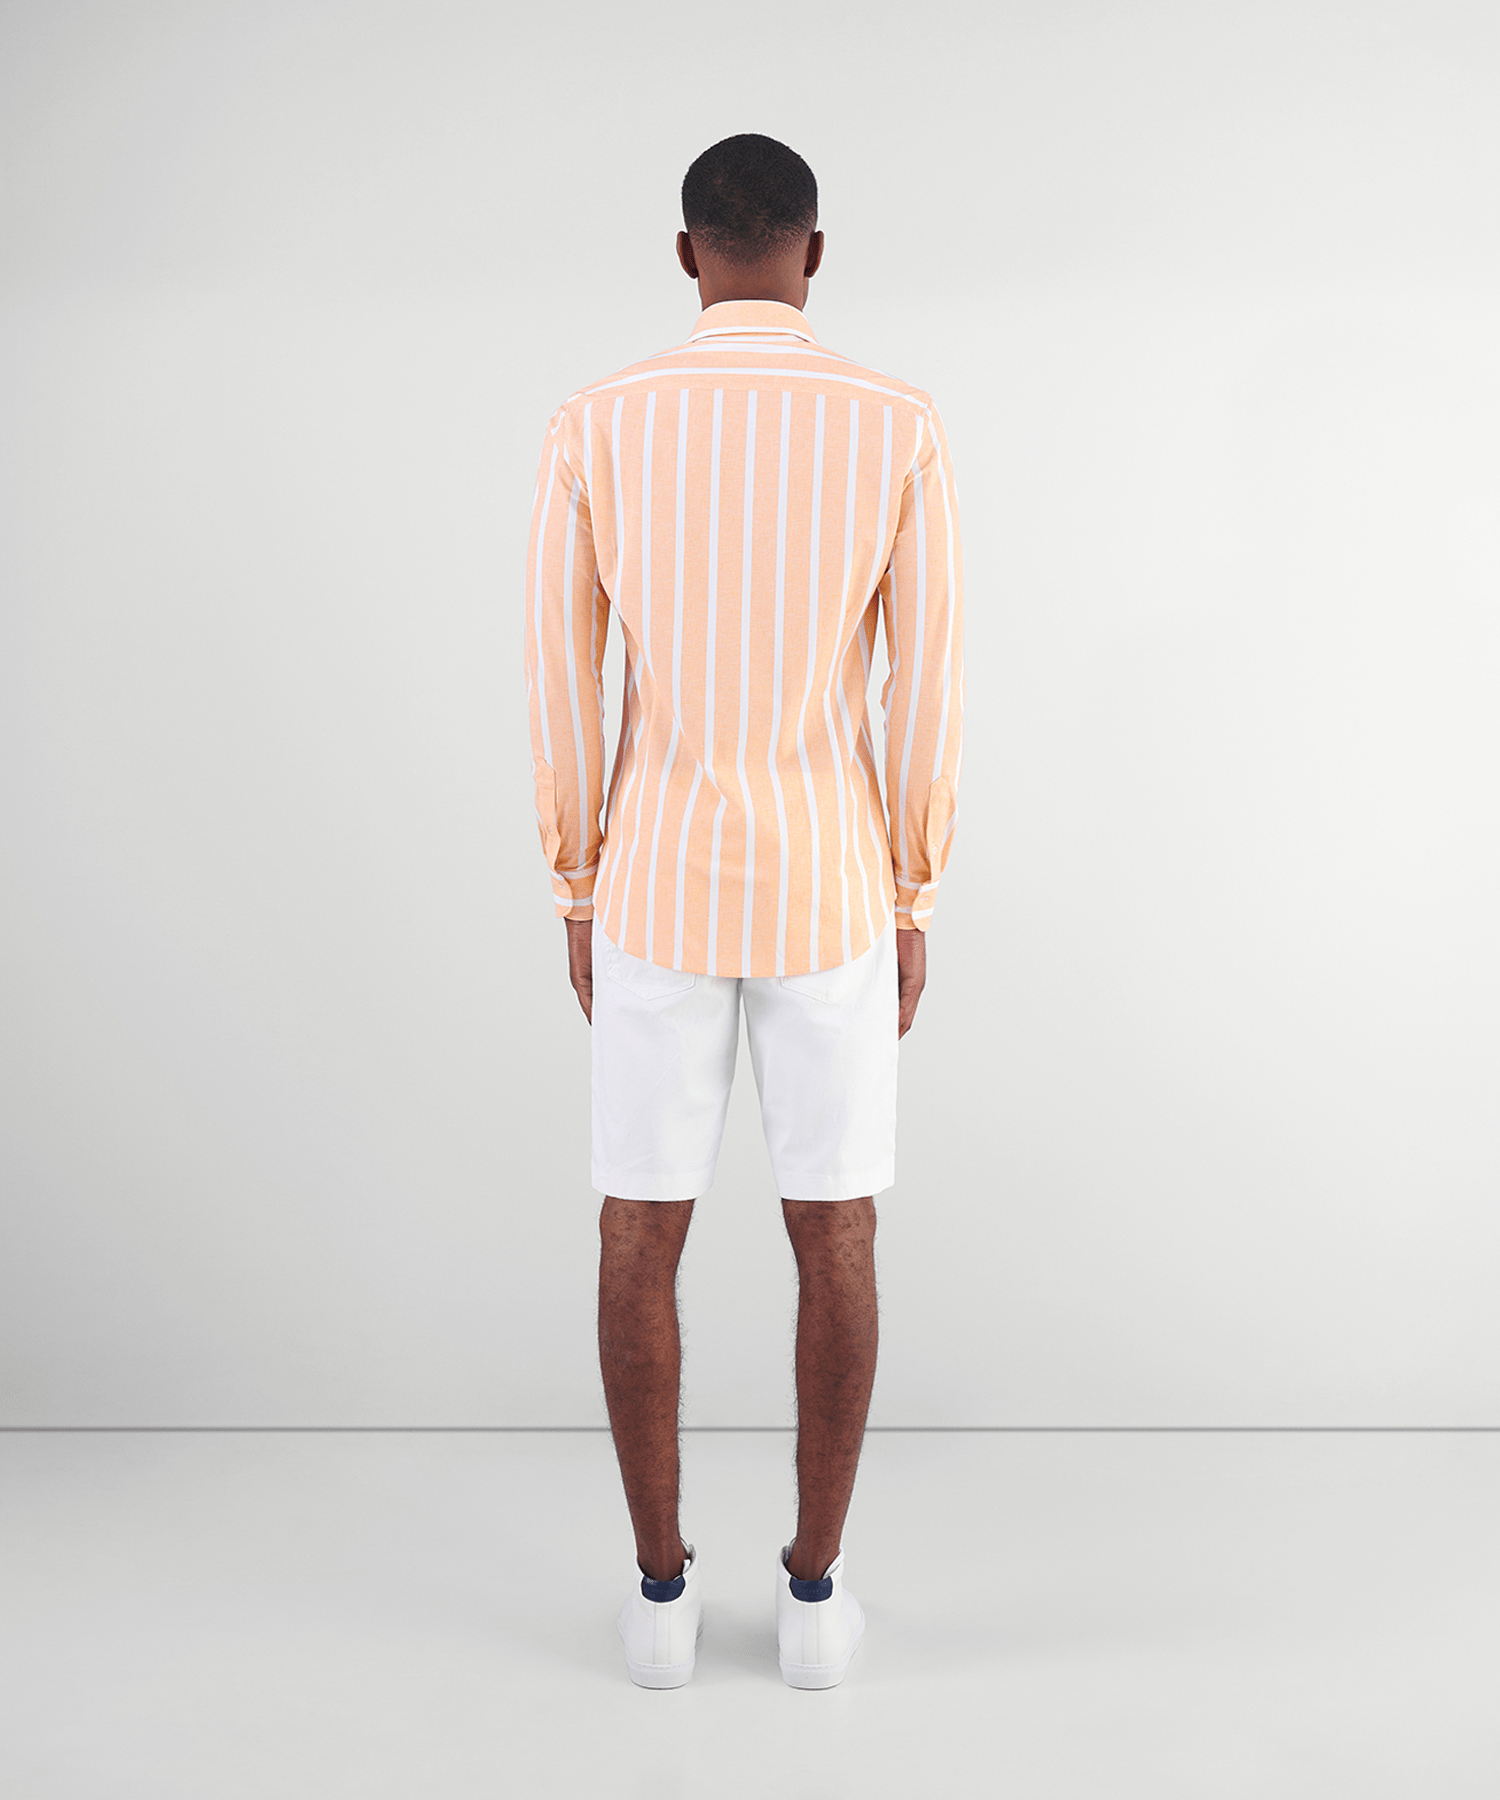 SOCI3TY Overhemd techfabric wit/oranje gestreept - The Society Shop